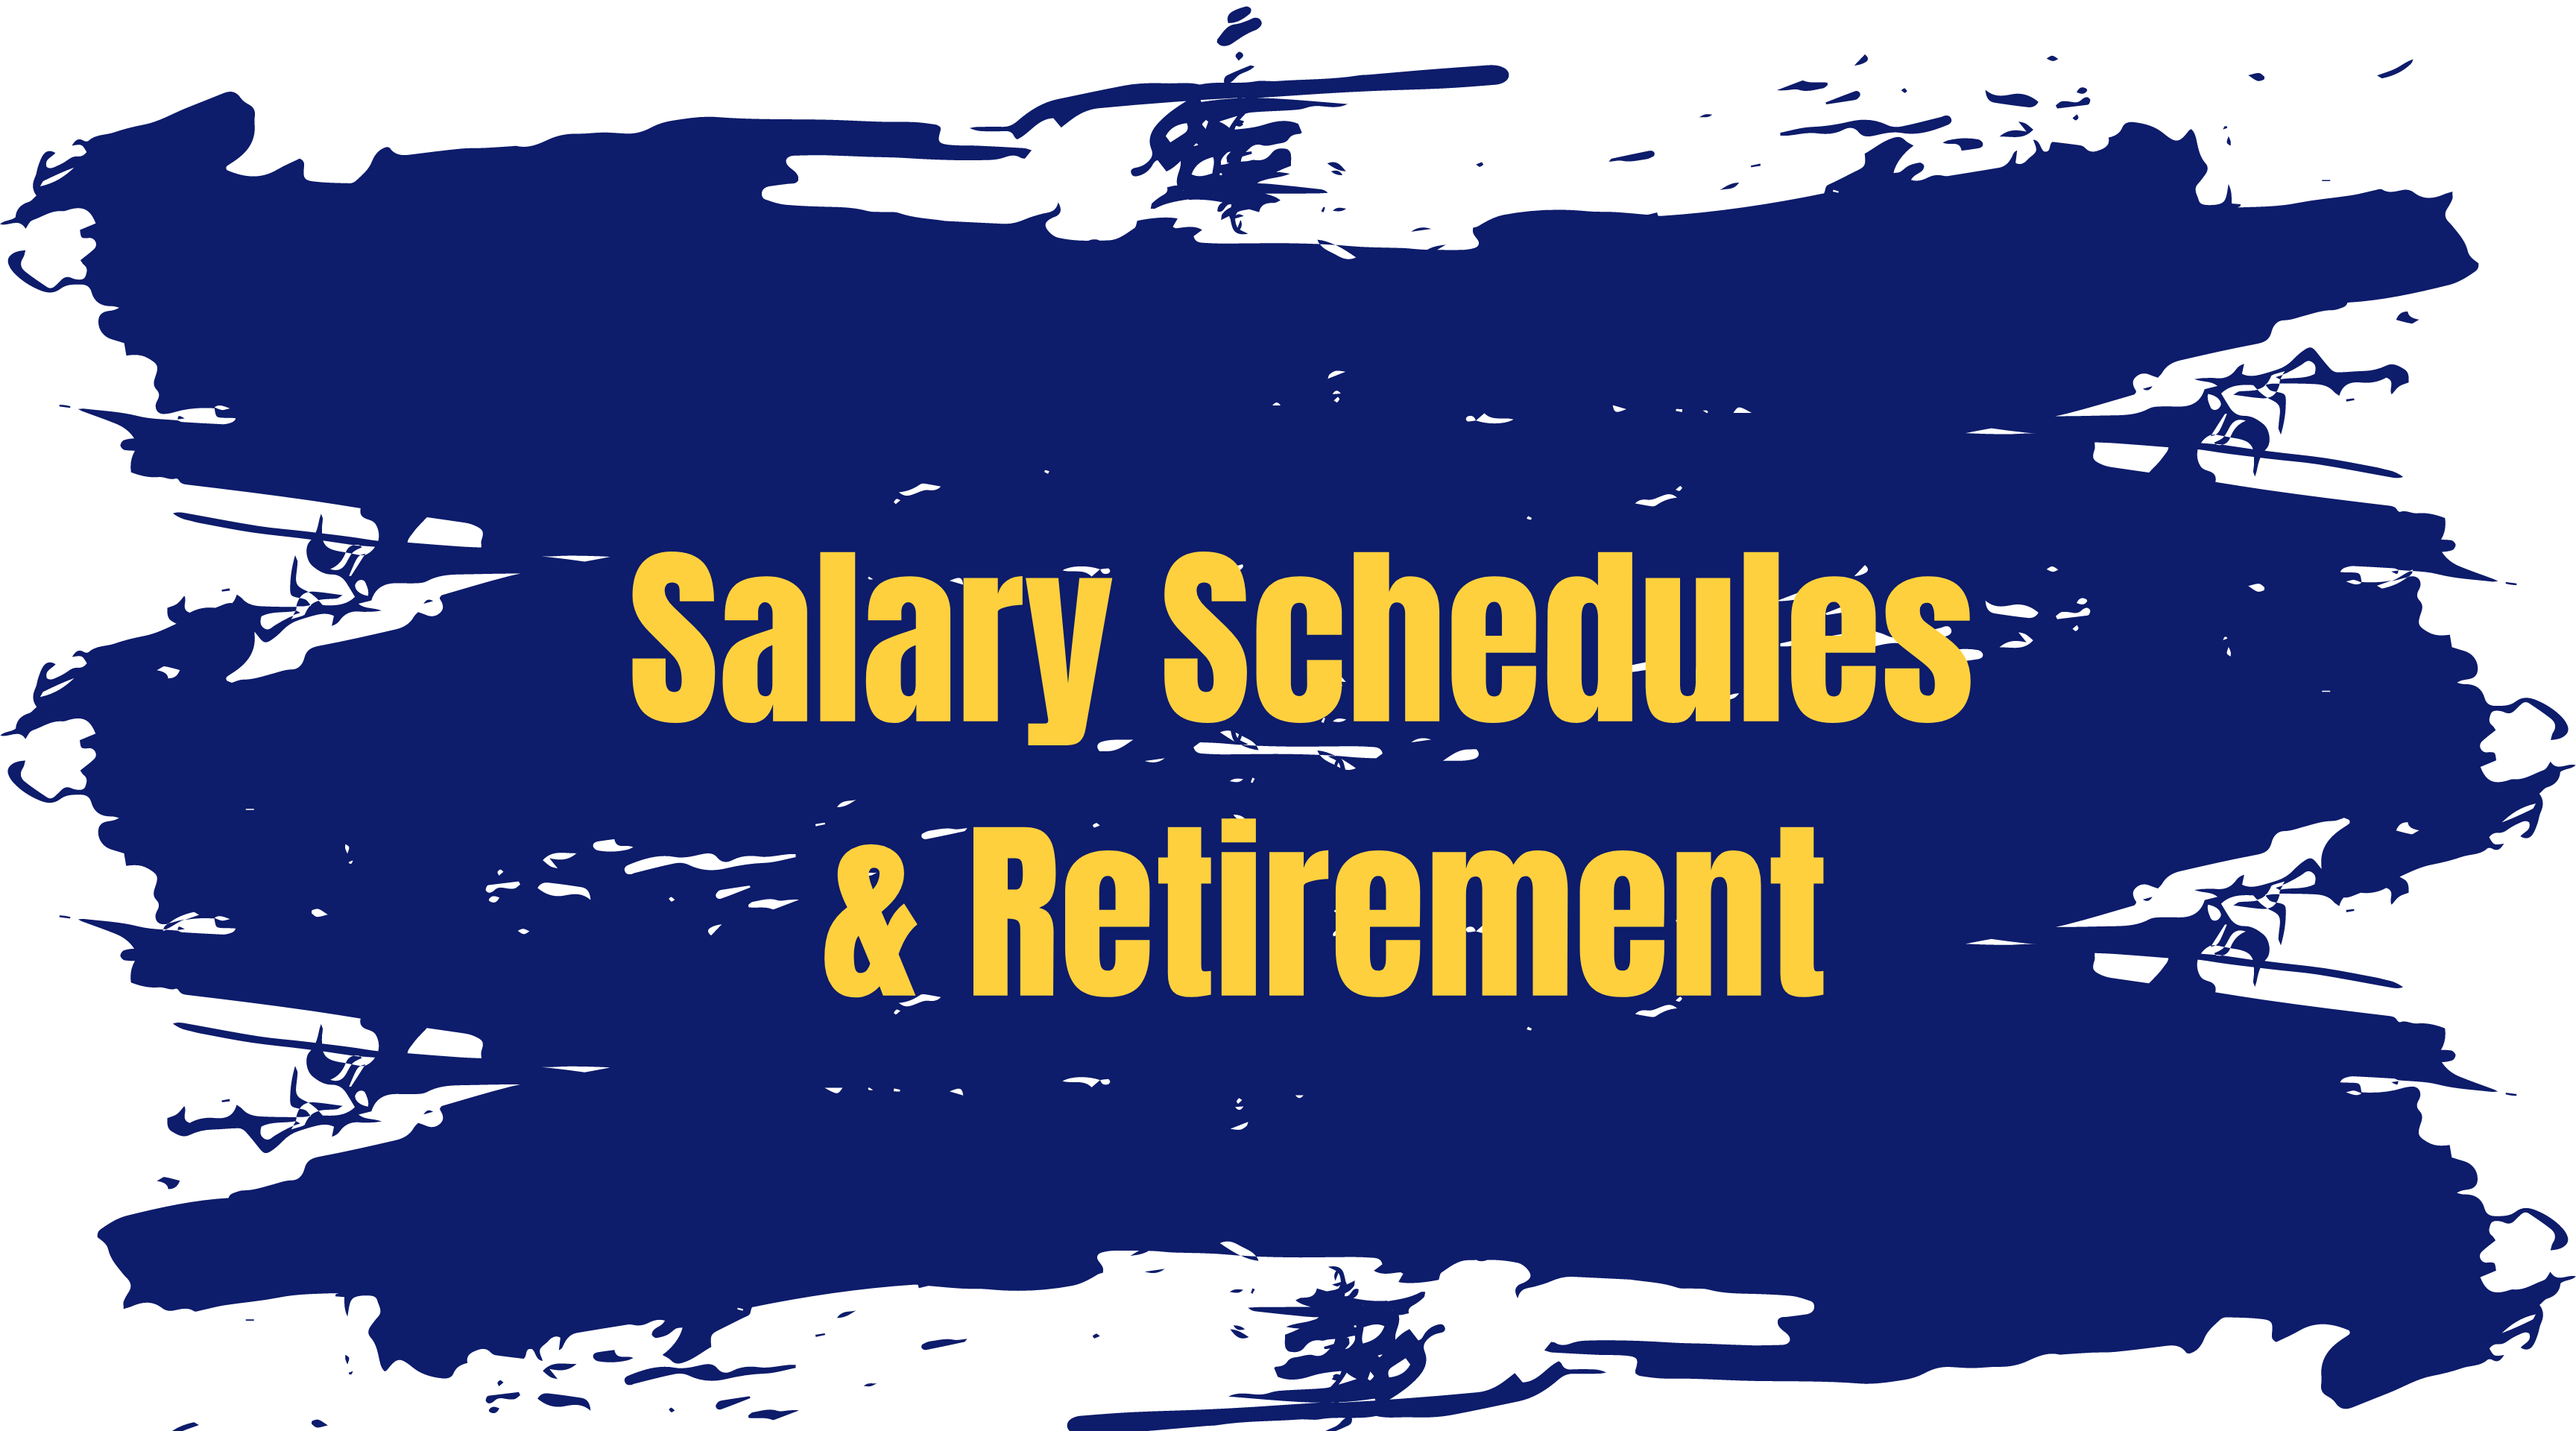 Salary Schedules & Retirement